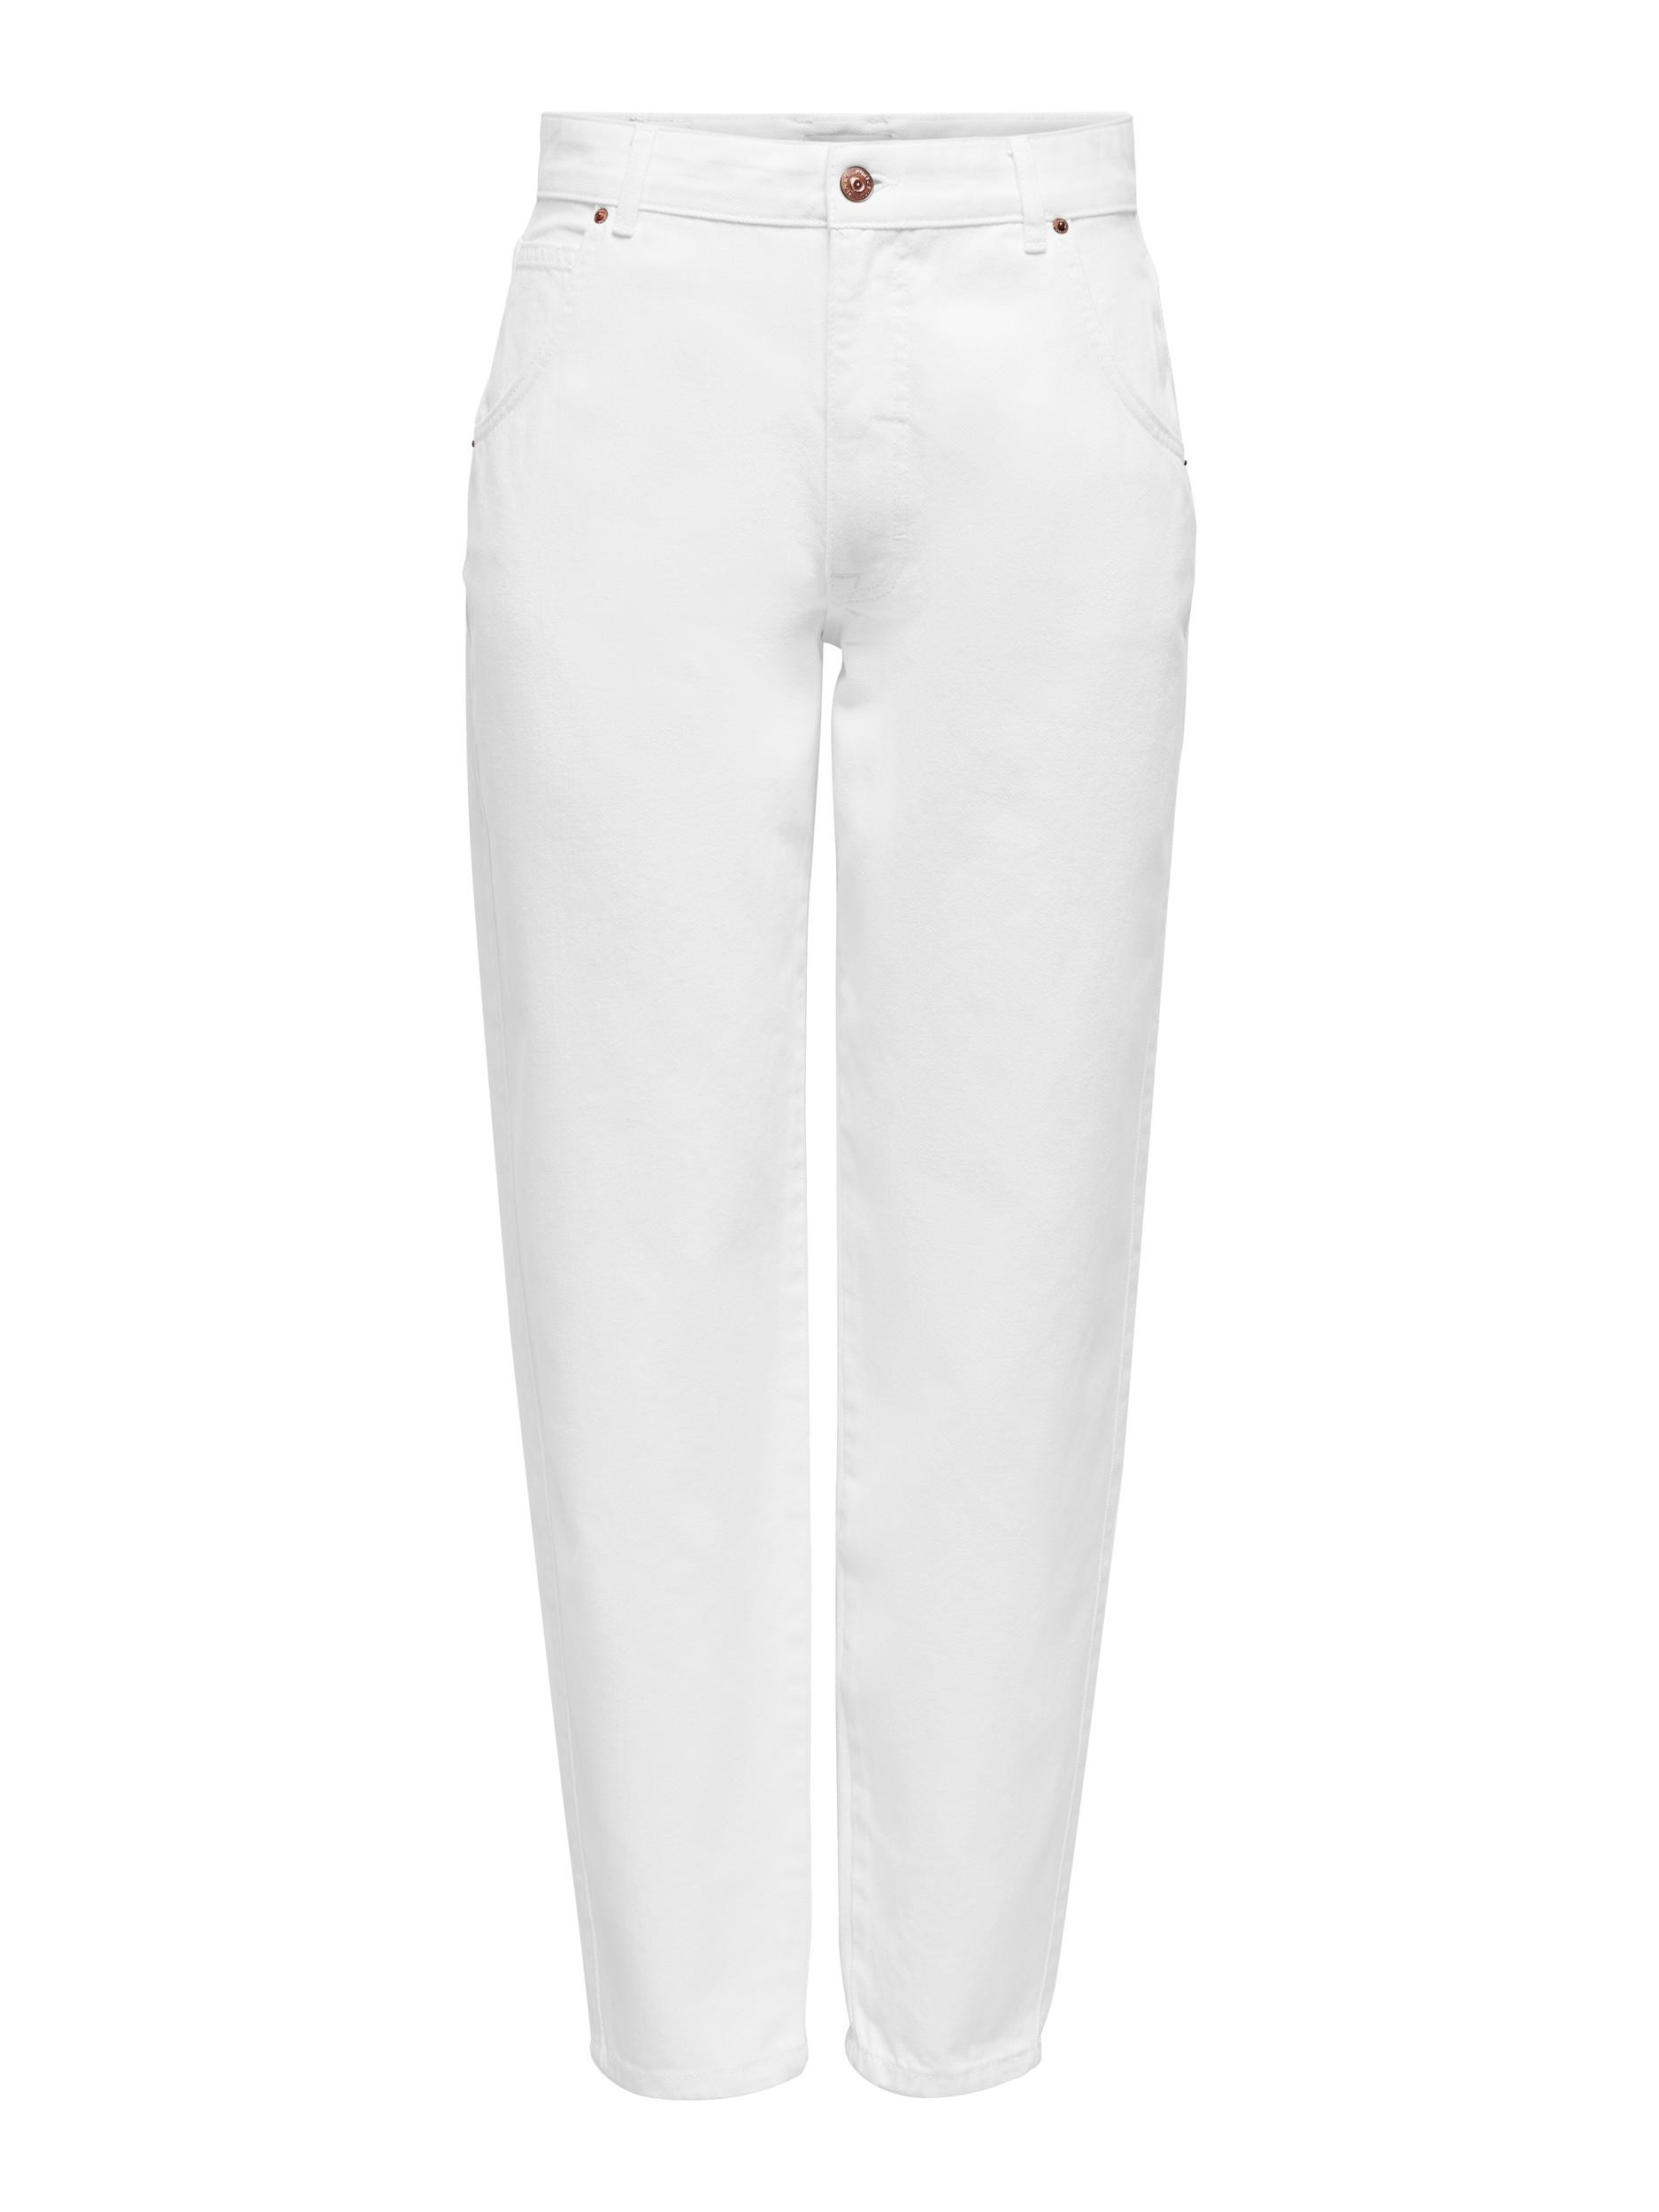 Jeans 5 tasche, Bianco, large image number 0